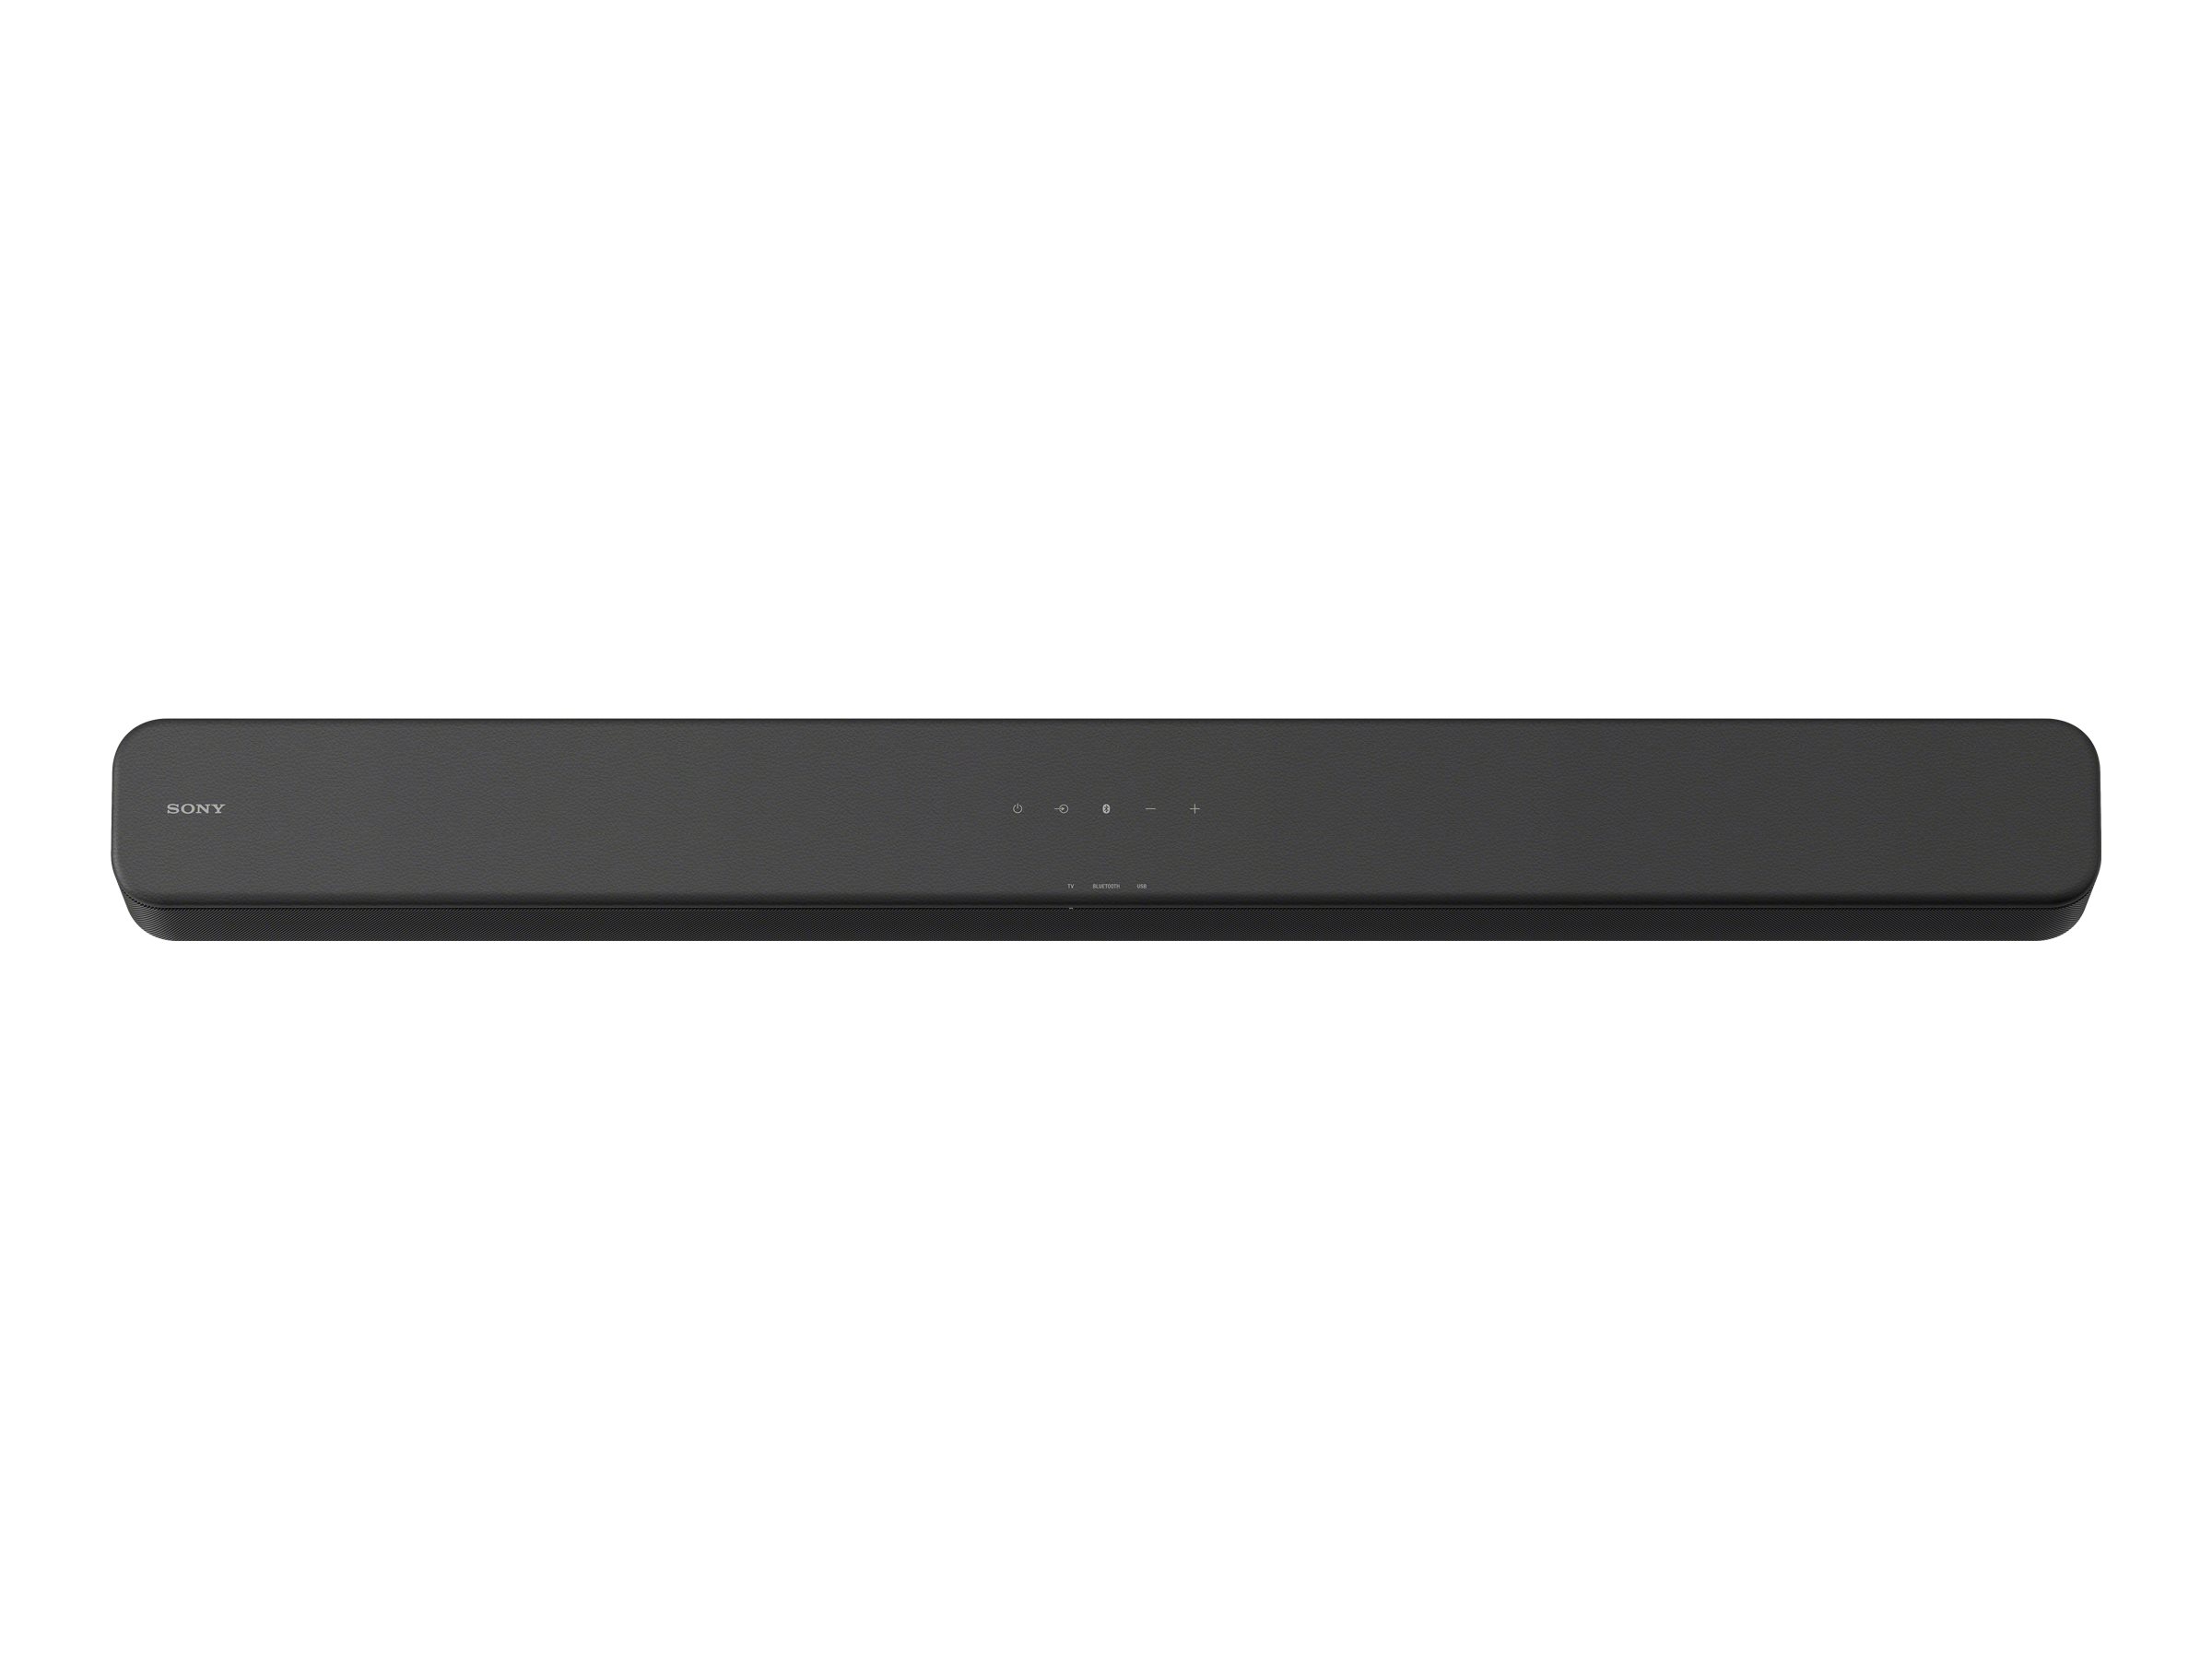 Sony 2.0 Channel 120W Soundbar with Bluetooth and Surround - HT-S100F 